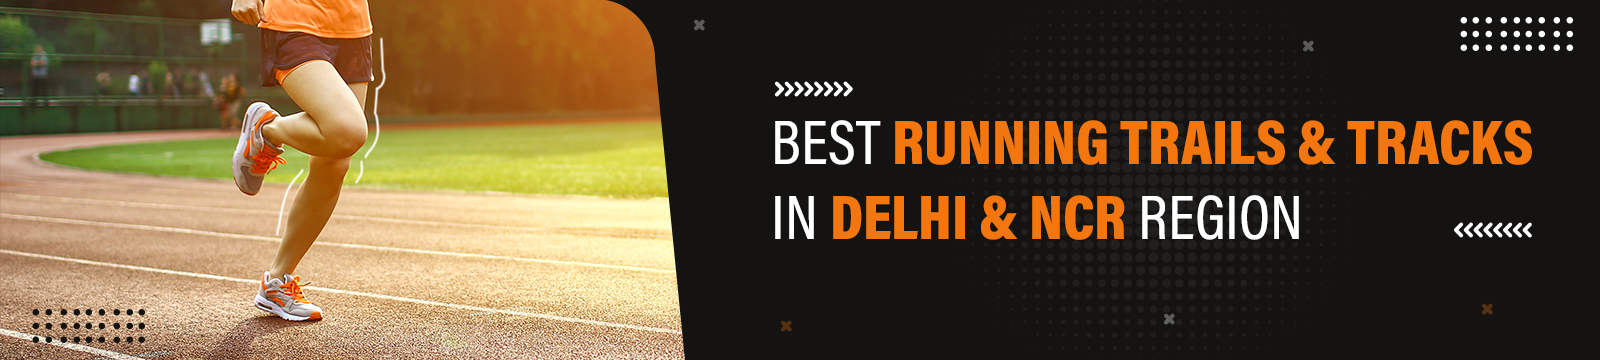 7 Of The Best Running Trails & Tracks In Delhi & NCR